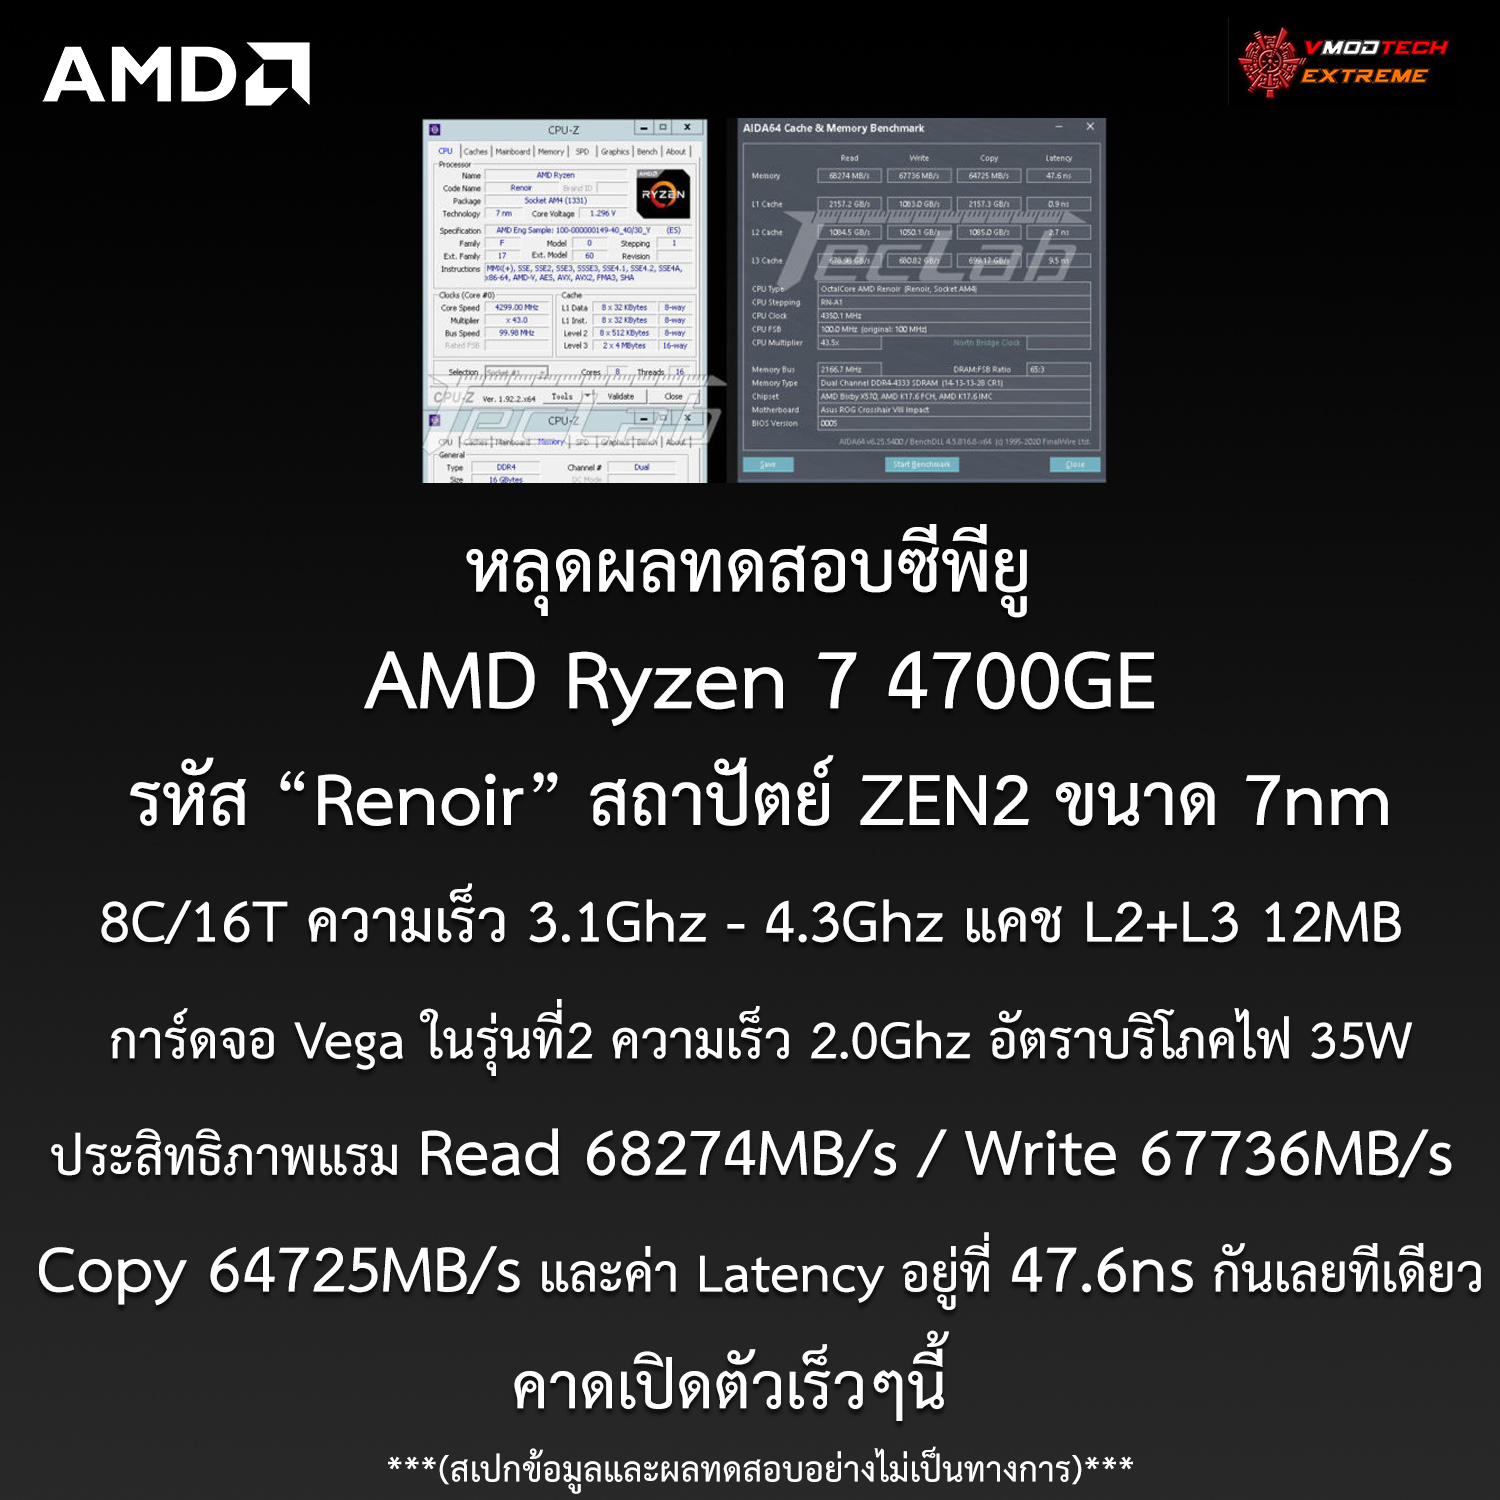 amd ryzen 4000ge benchmark หลุดผลทดสอบซีพียู AMD Ryzen 7 4700GE ในรหัส Renoir ที่มีการ์ดจอในตัว APU รุ่นใหม่ล่าสุดอย่างไม่เป็นทางการ 